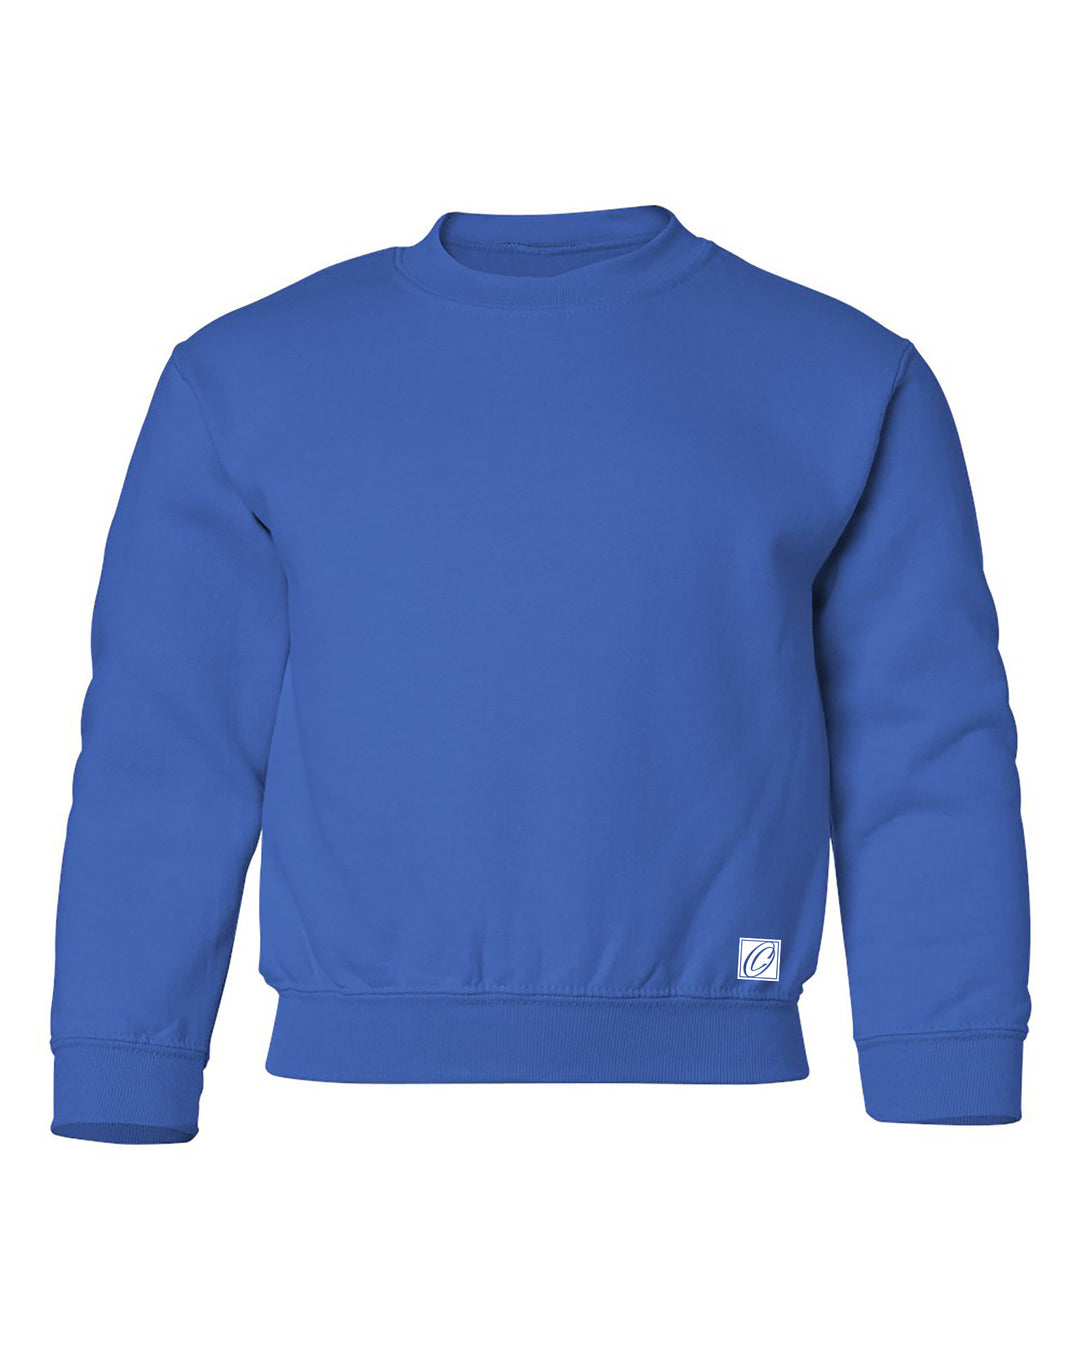 Gildan Youth Heavy Blend™  Crewneck Sweatshirt